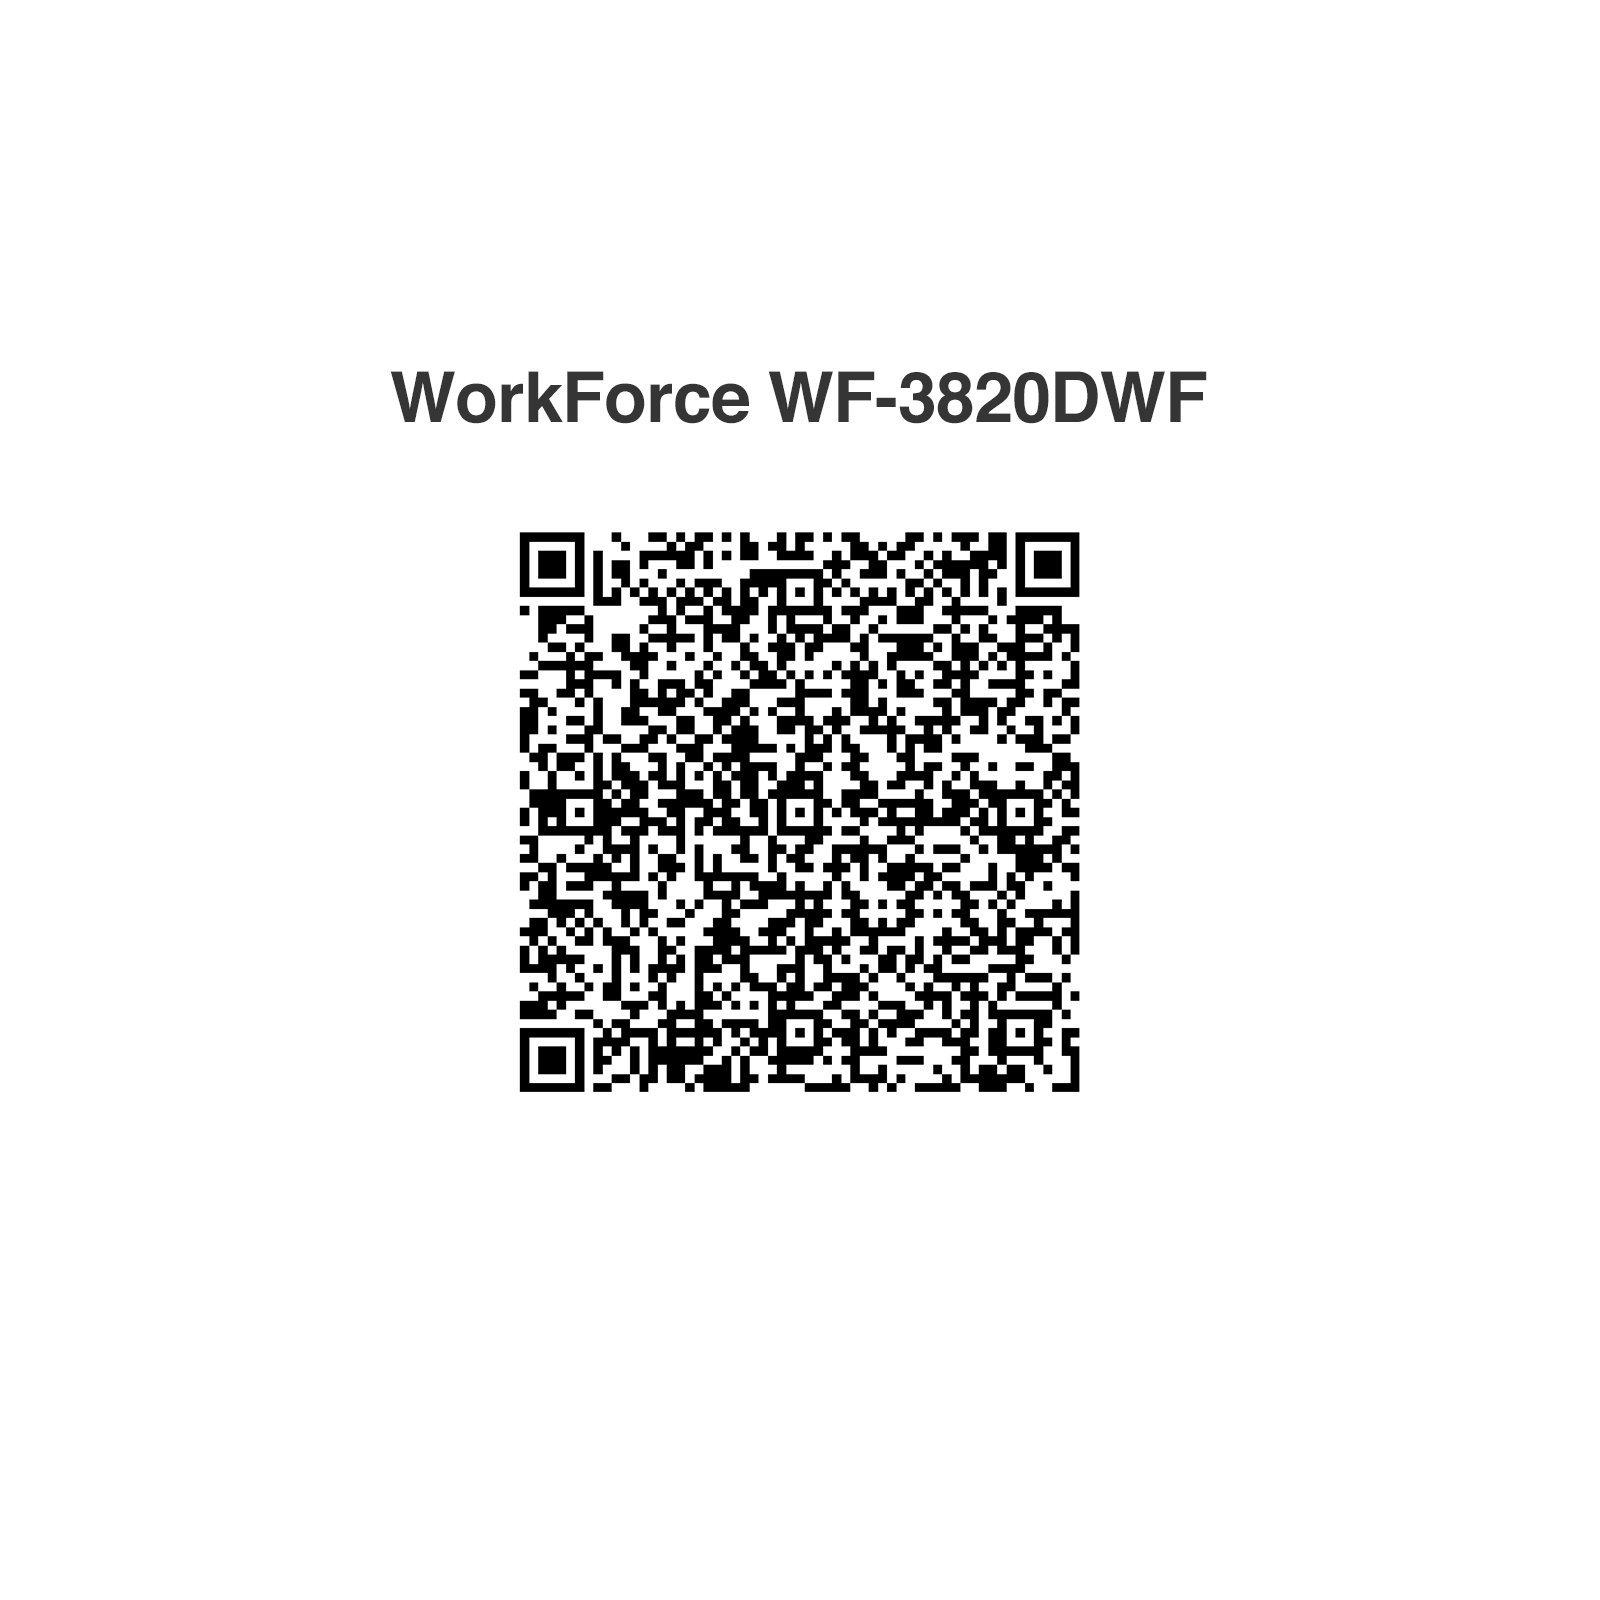 Imprimante multifonction Epson Imprimante WorkForce Pro WF3820DWF 712 ppm  LAN WiFi Noir